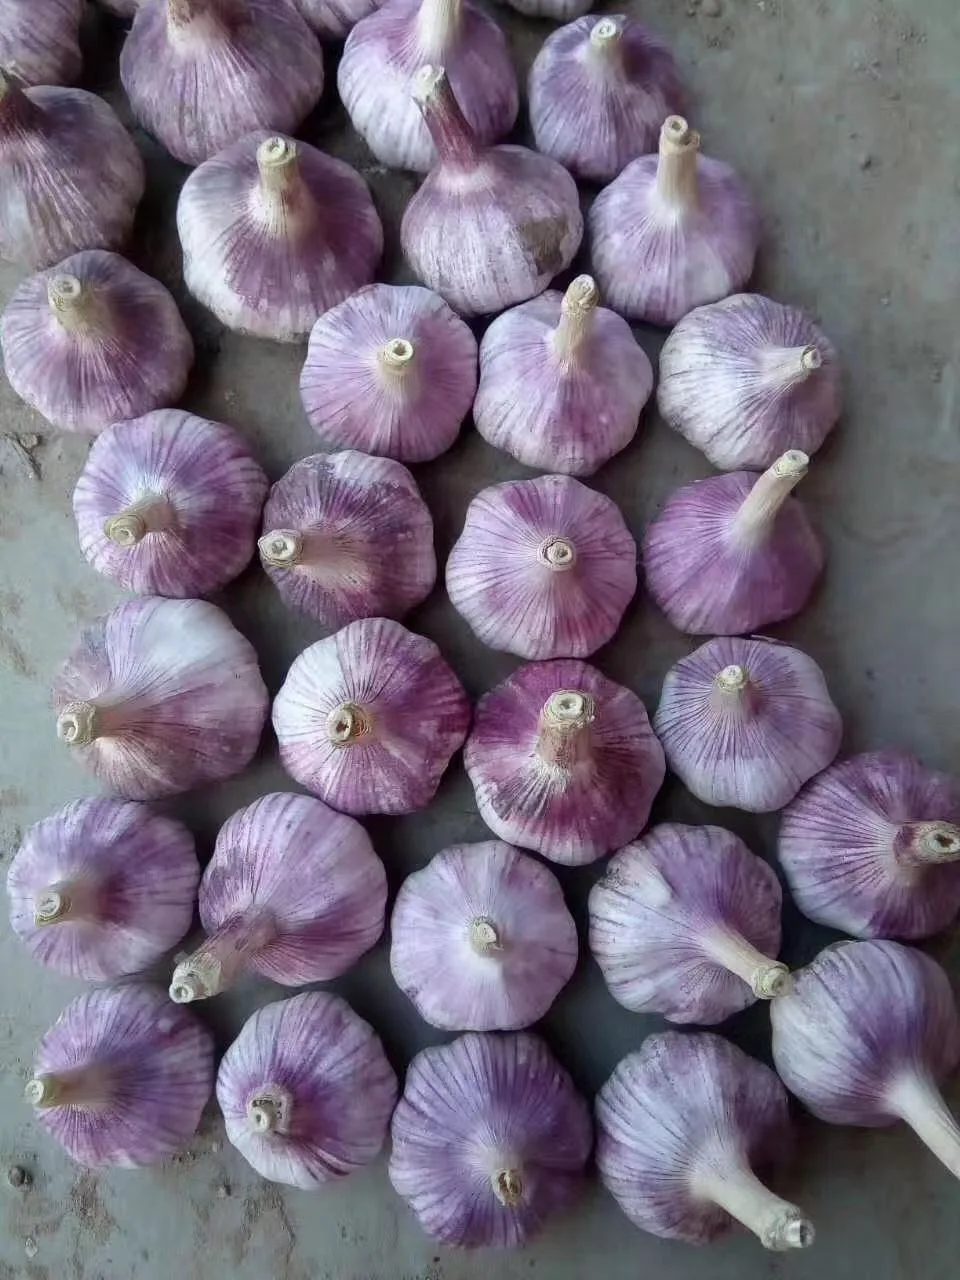 Good Quality Fresh Normal White Garlic